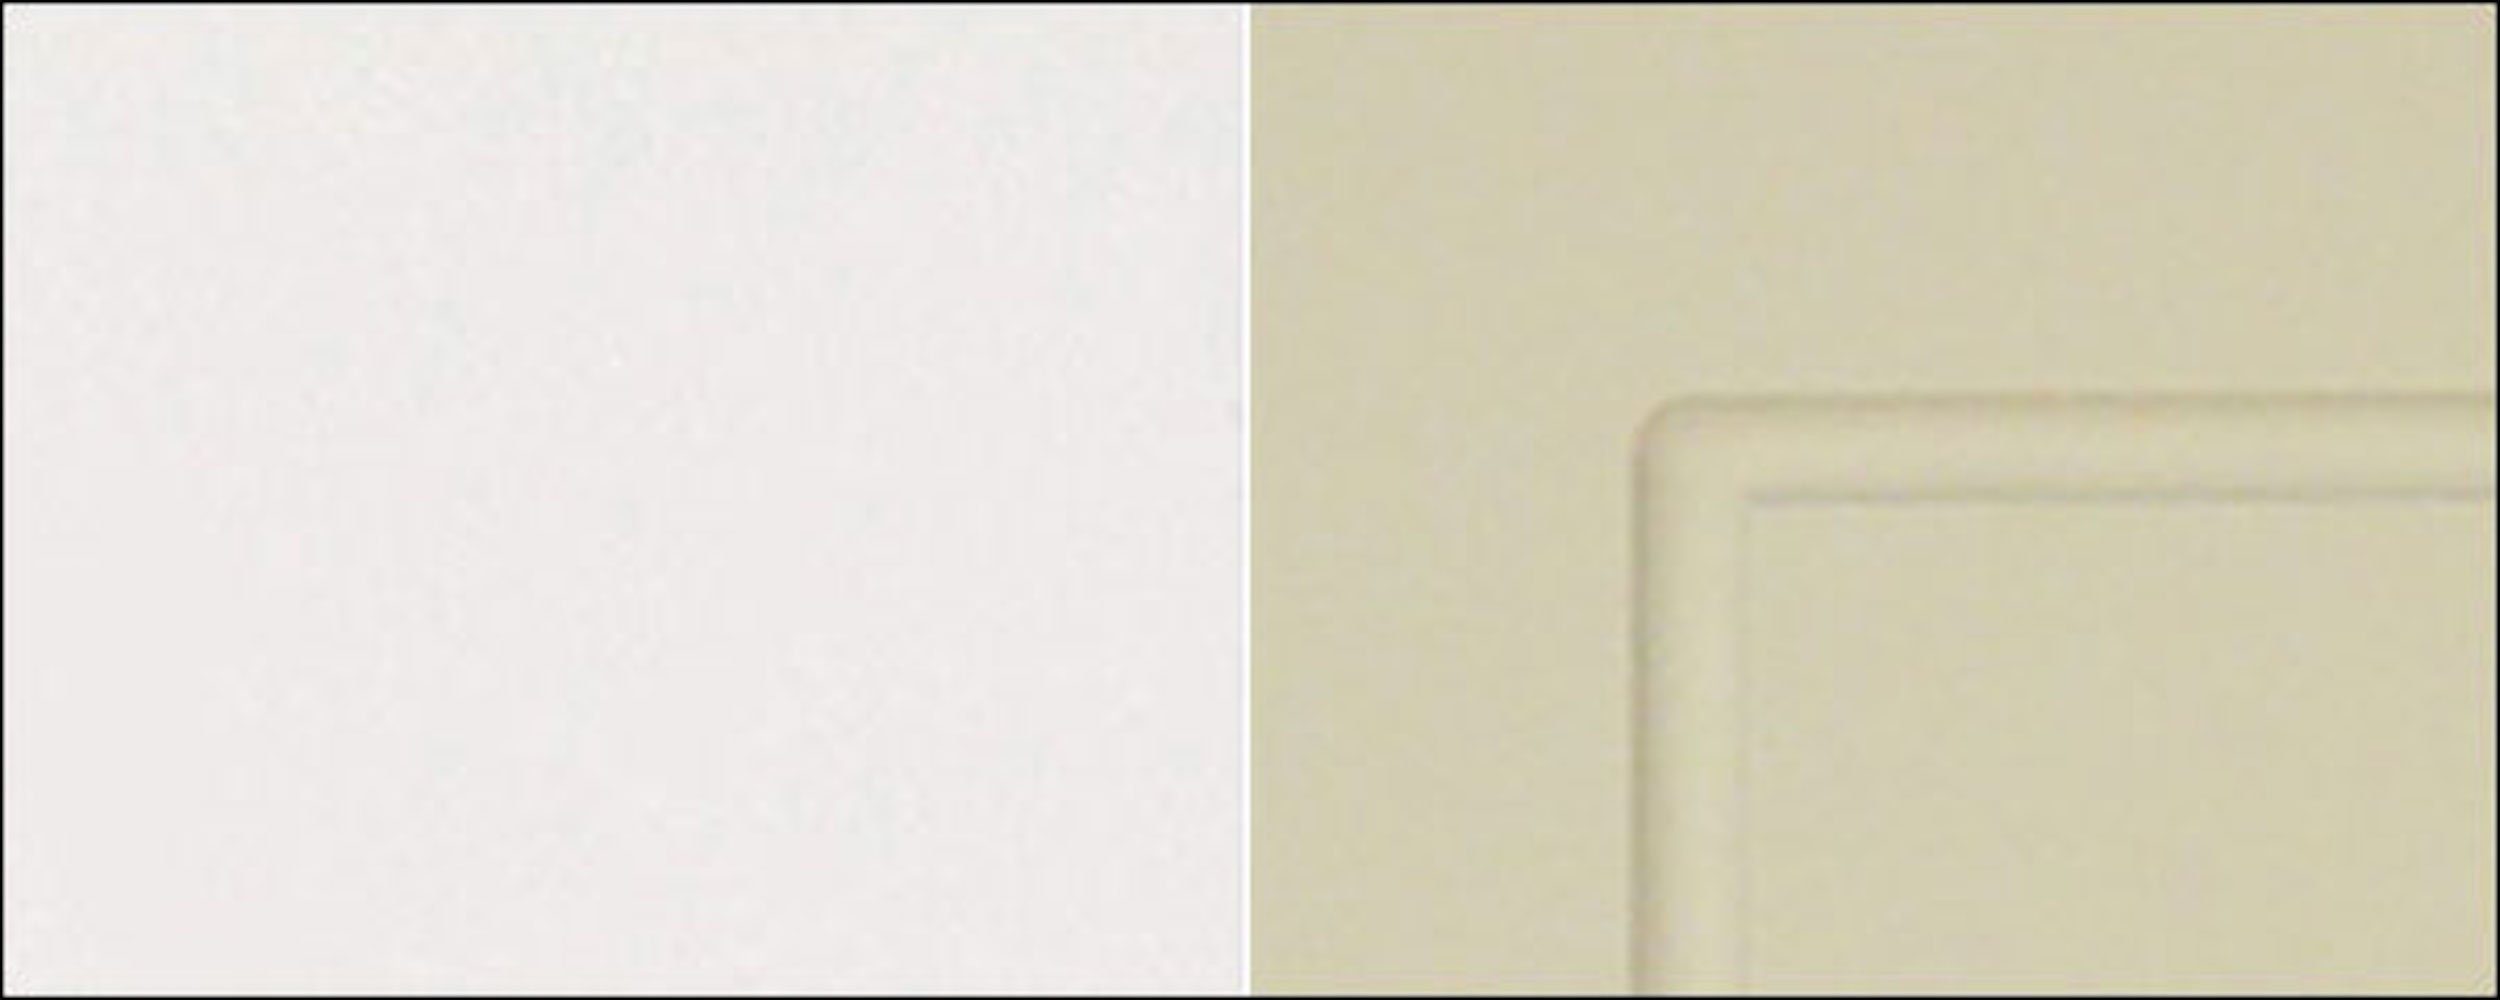 Korpusfarbe Kvantum (Kvantum) vanille Front- matt 40cm 1-türig wählbar Feldmann-Wohnen und Klapphängeschrank